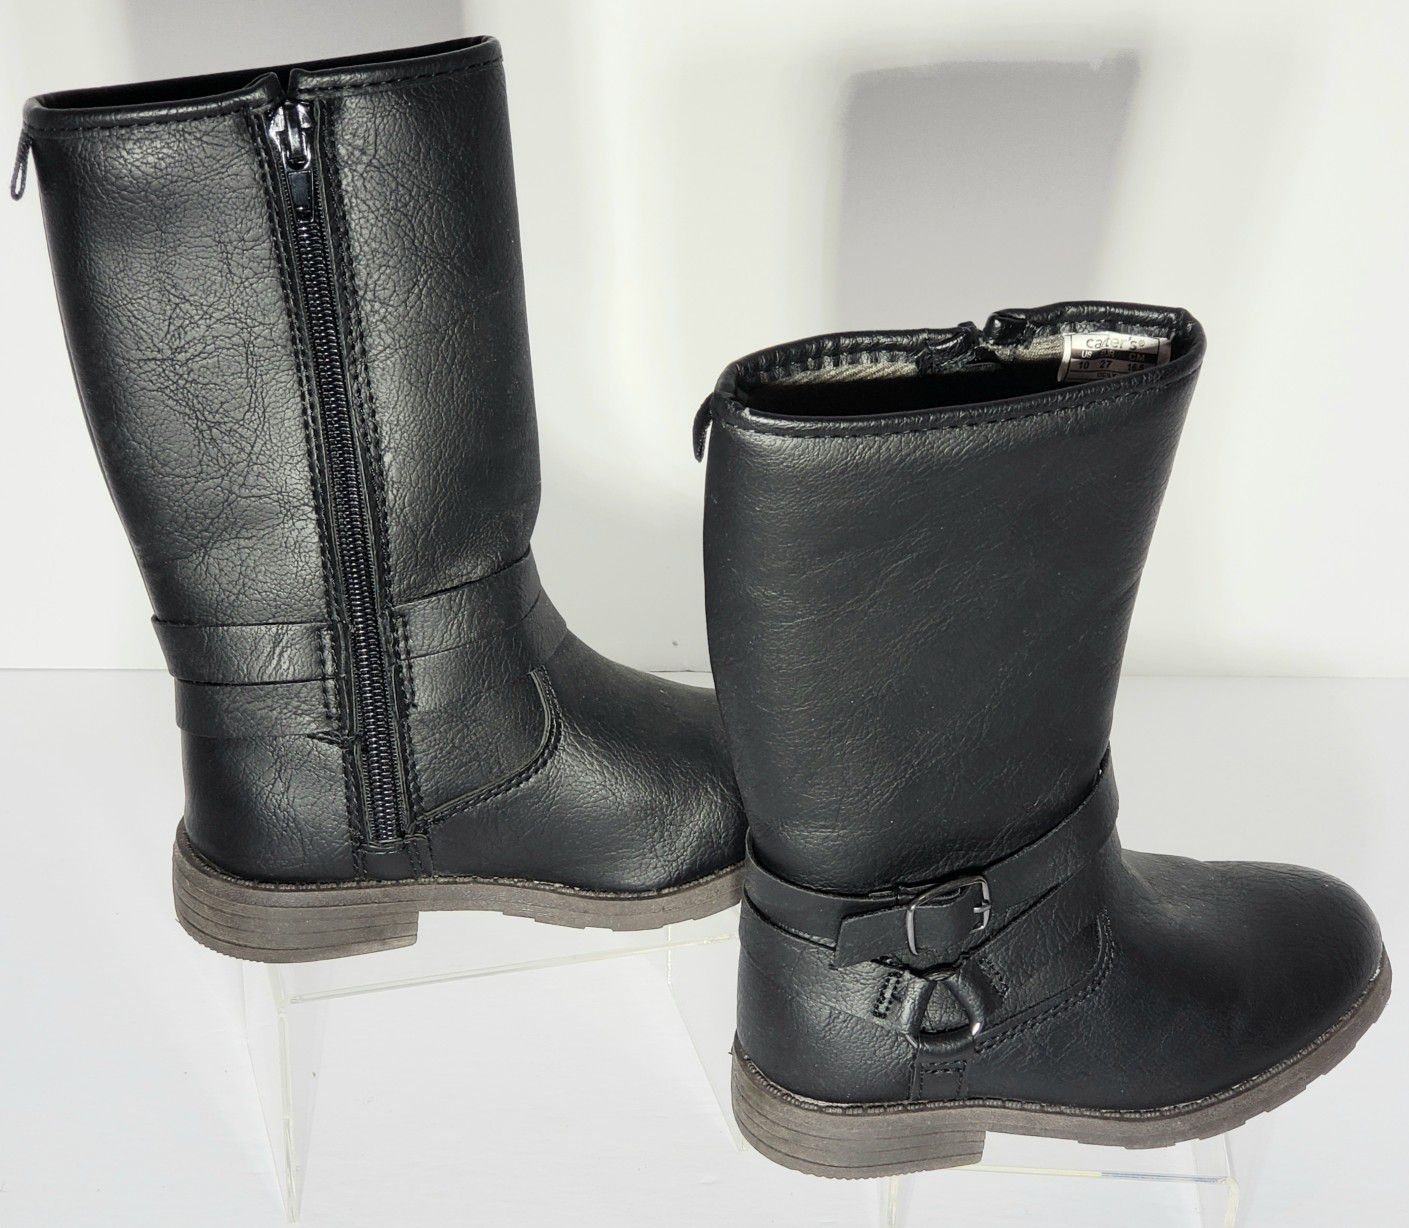 NEW Children's Toddler Girl Size 10 Black Boots